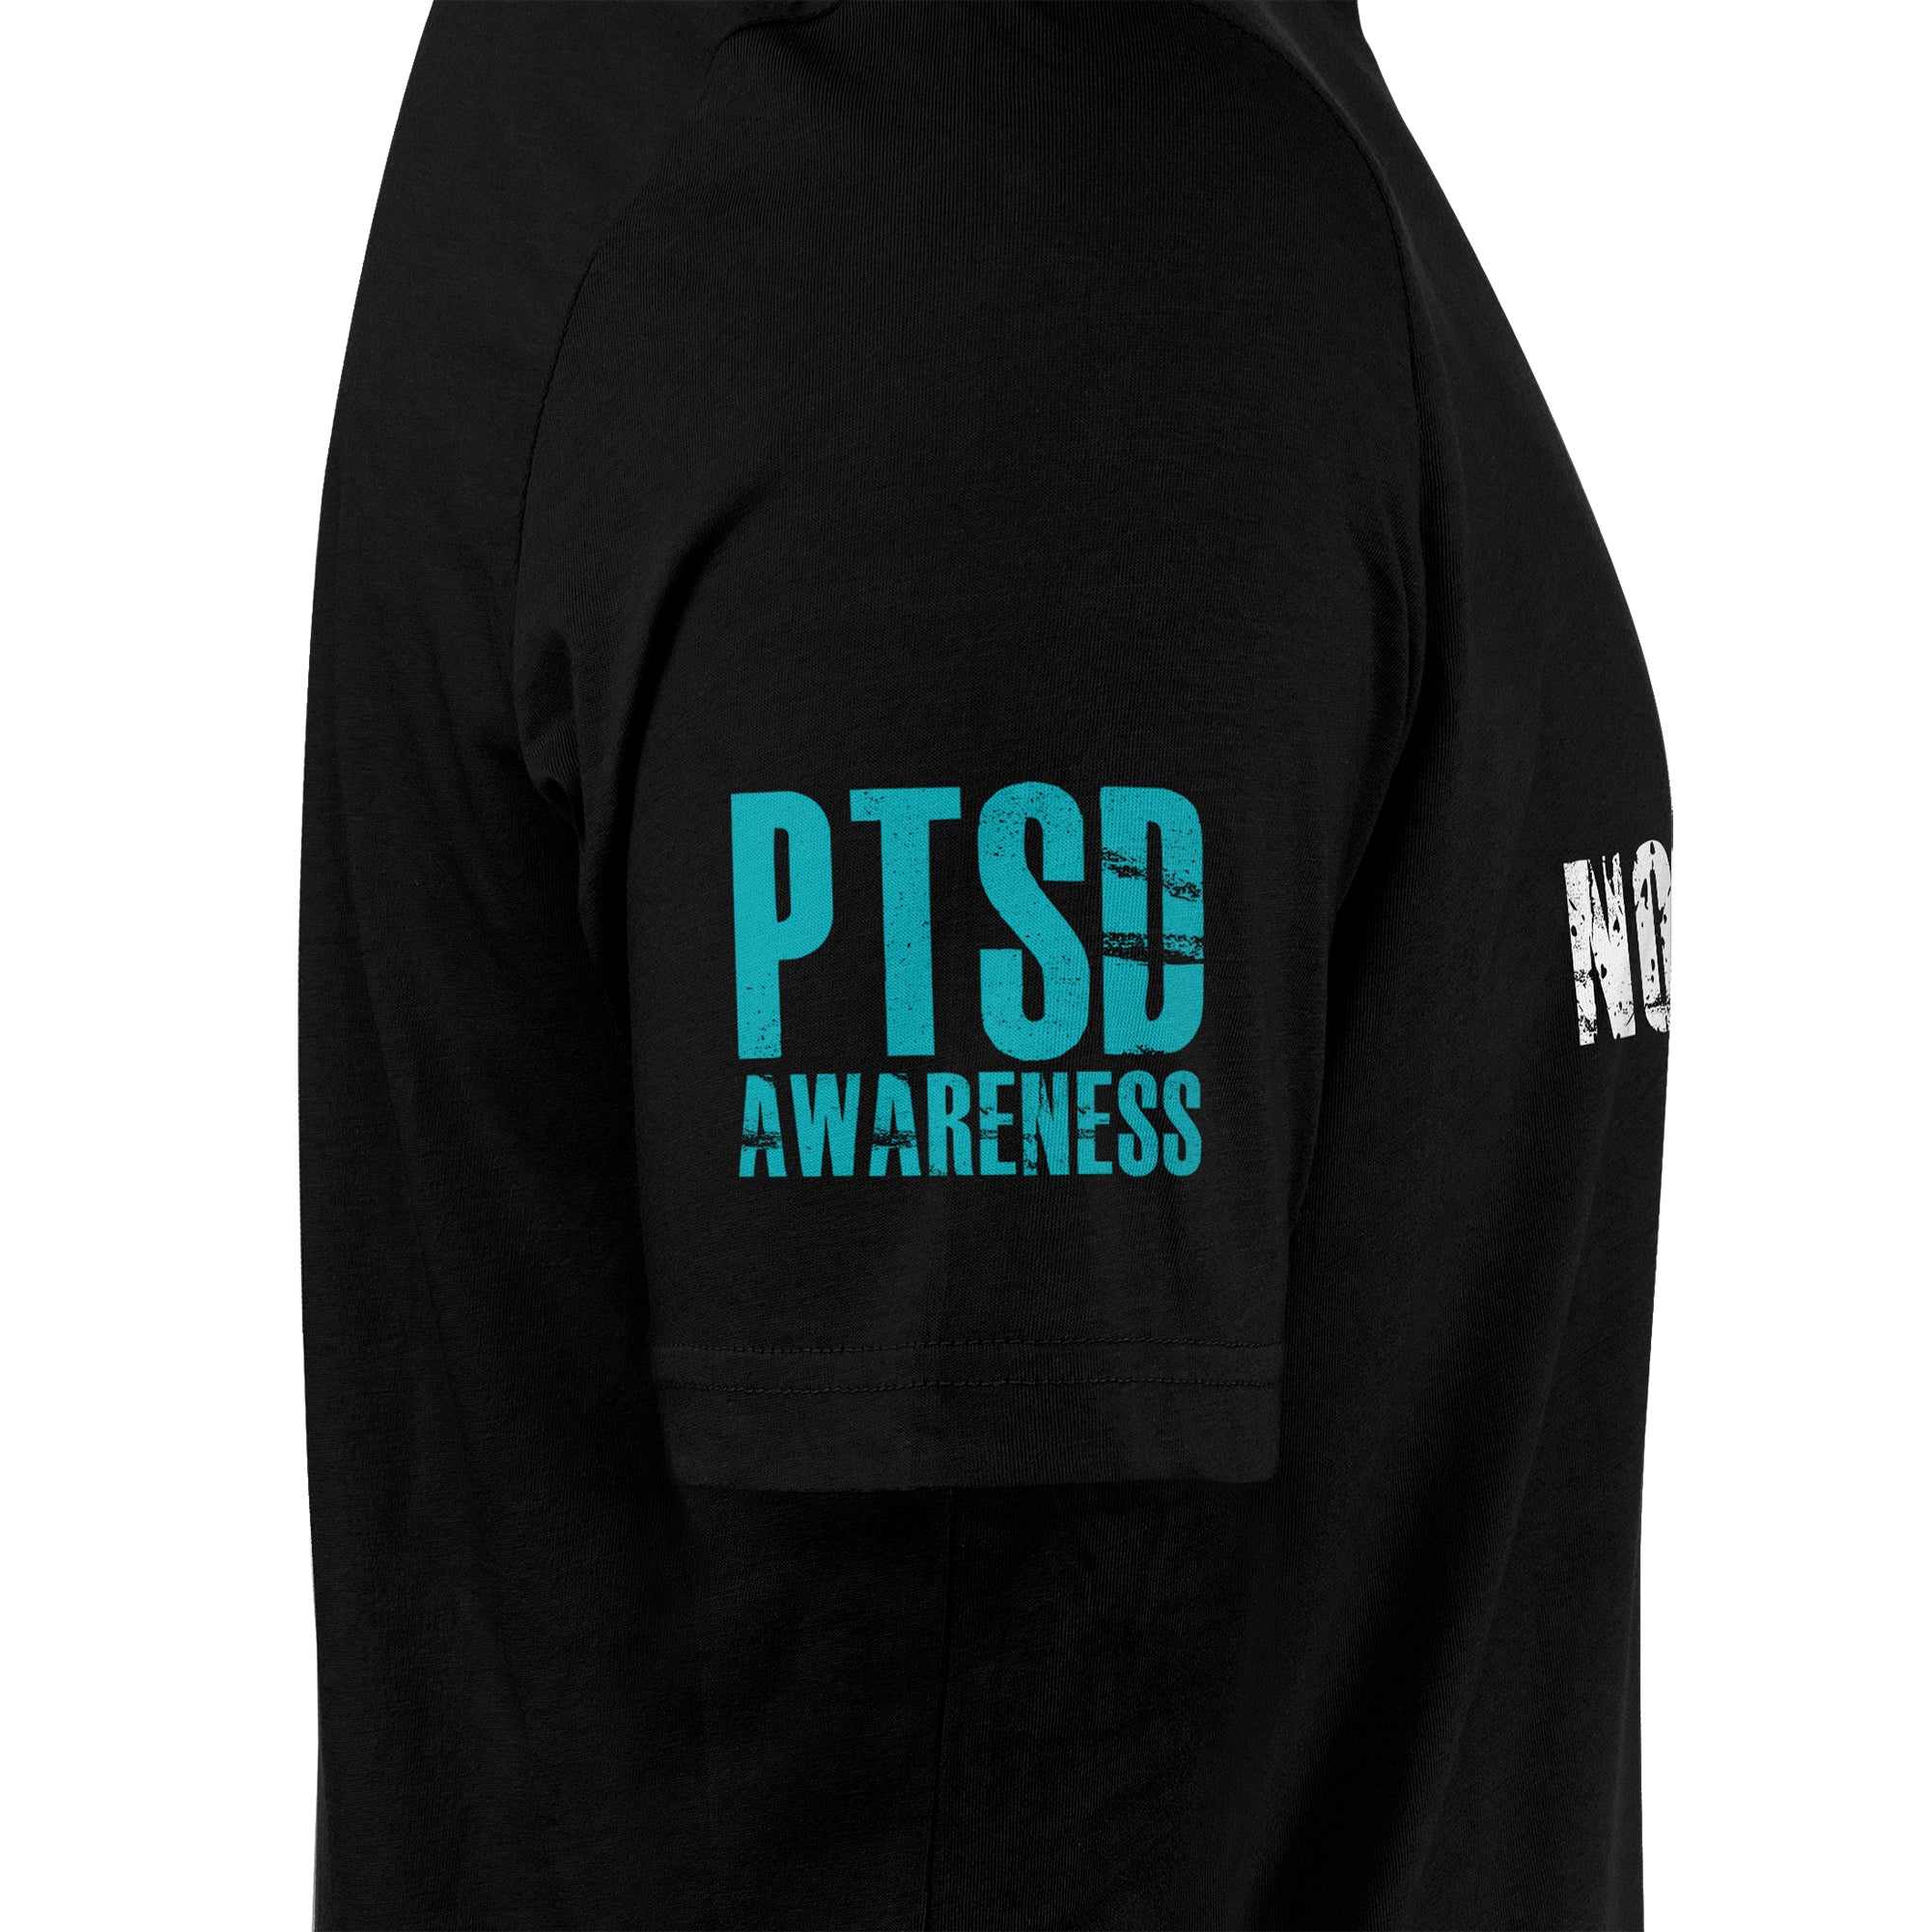 PTSD Not All Wounds-Men's Shirt-Ardent Patriot Apparel Co.